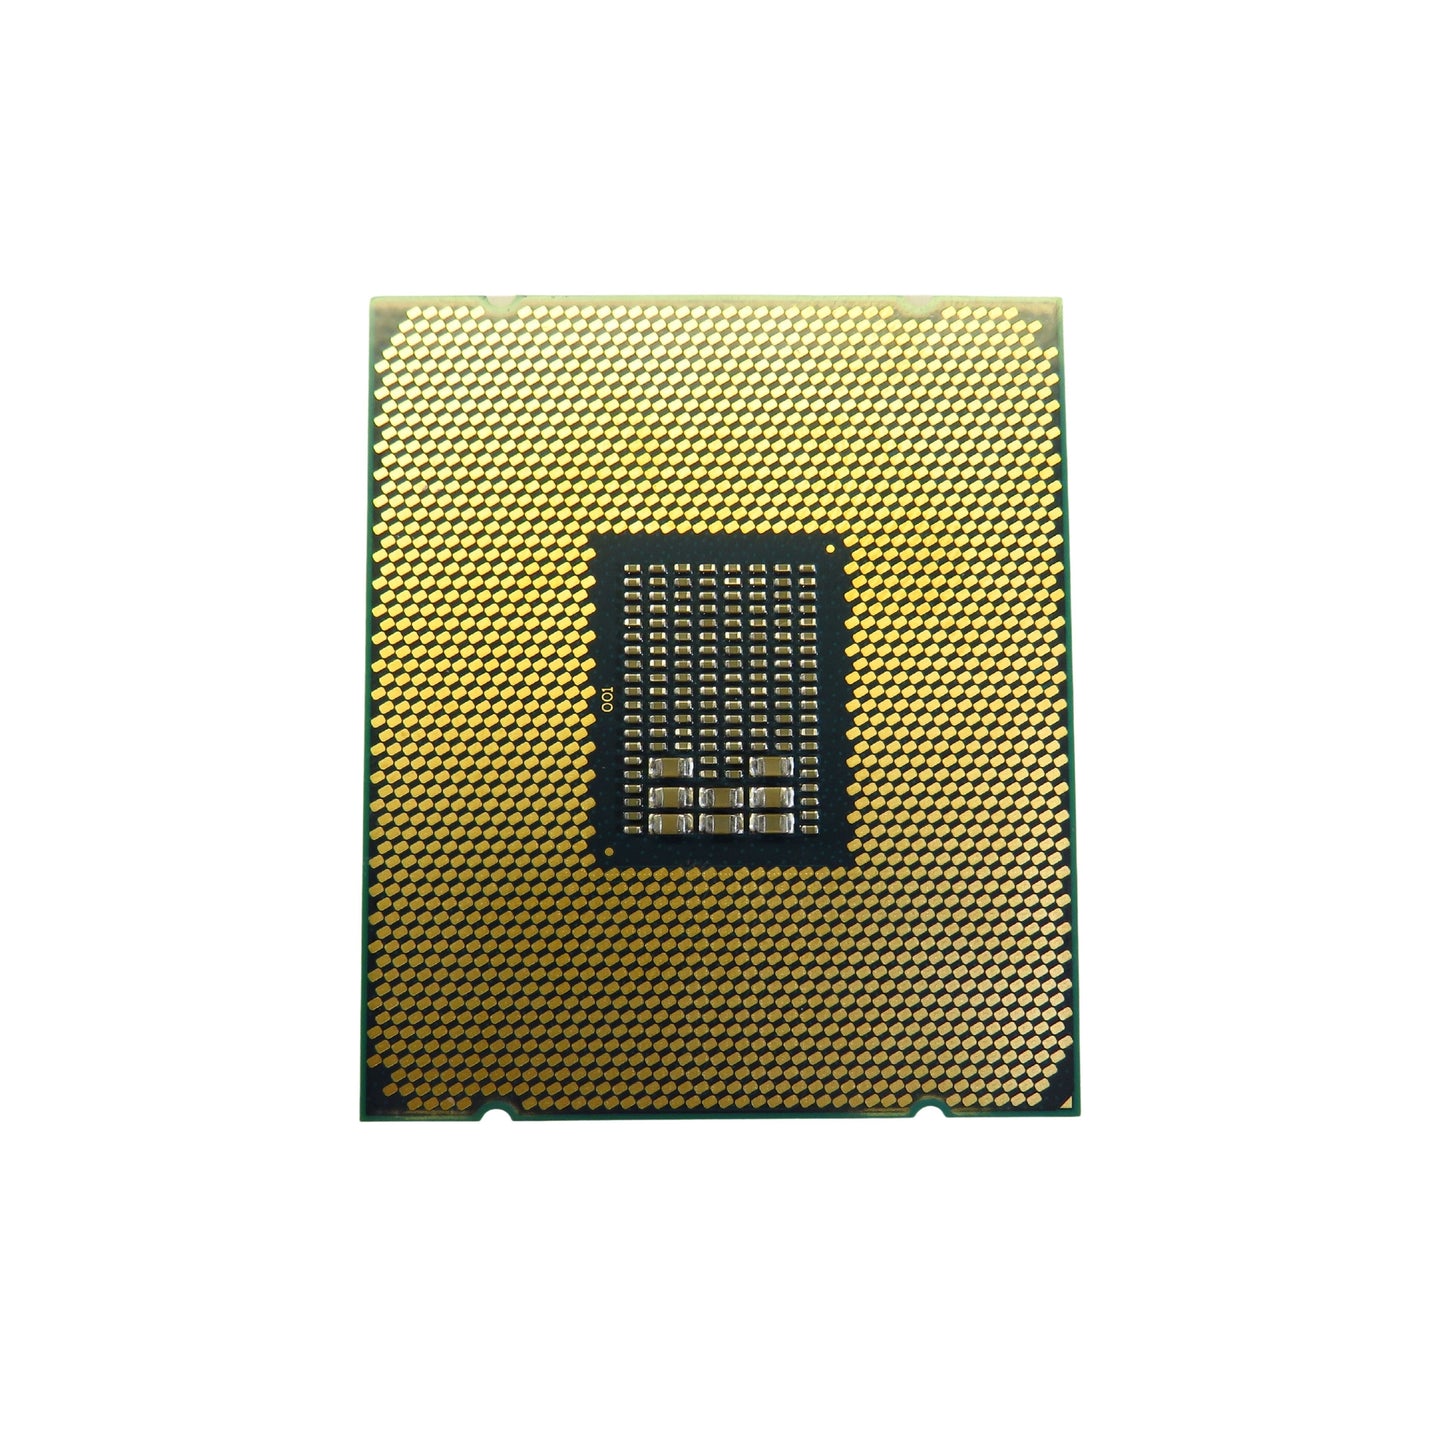 Intel SR2P4 Xeon E5-2643V4 3.4GHz 6 Core LGA2011-3 Server CPU Processor (Refurbished)